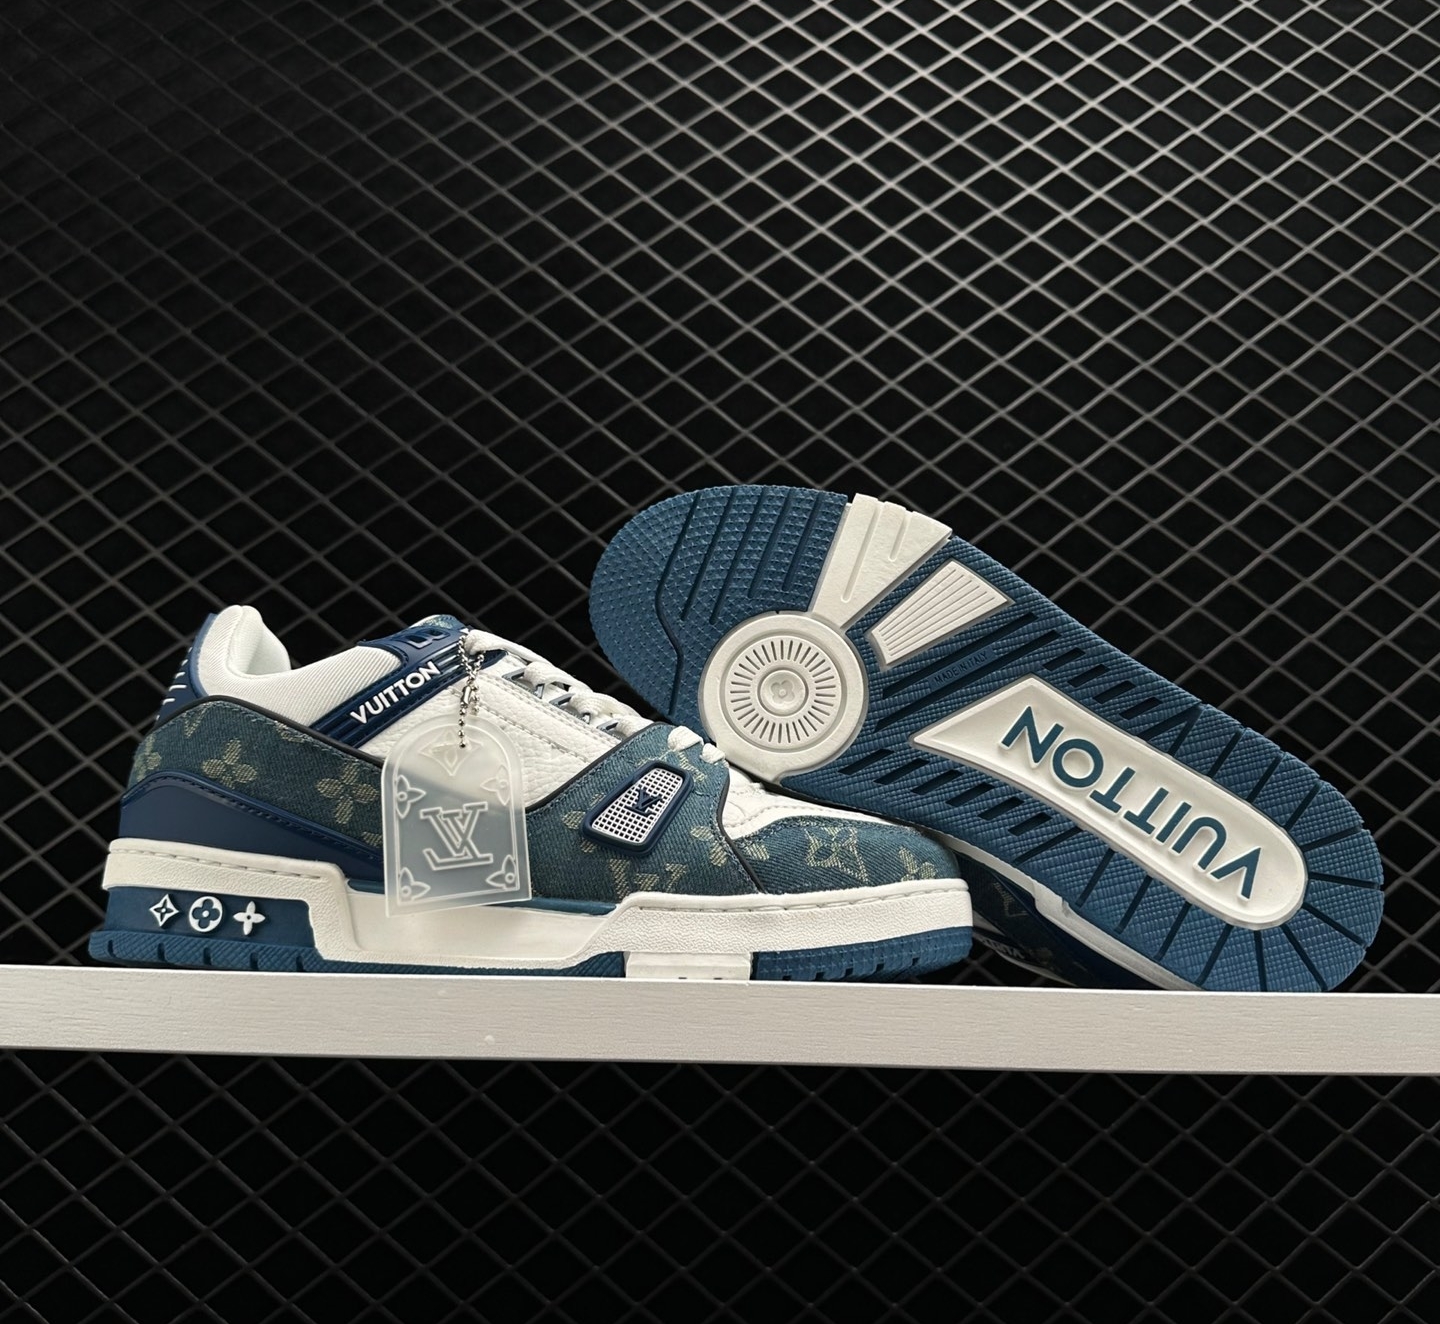 Louis Vuitton LV Trainer Monogram Denim White Blue - Stylish and Trendy Sneakers